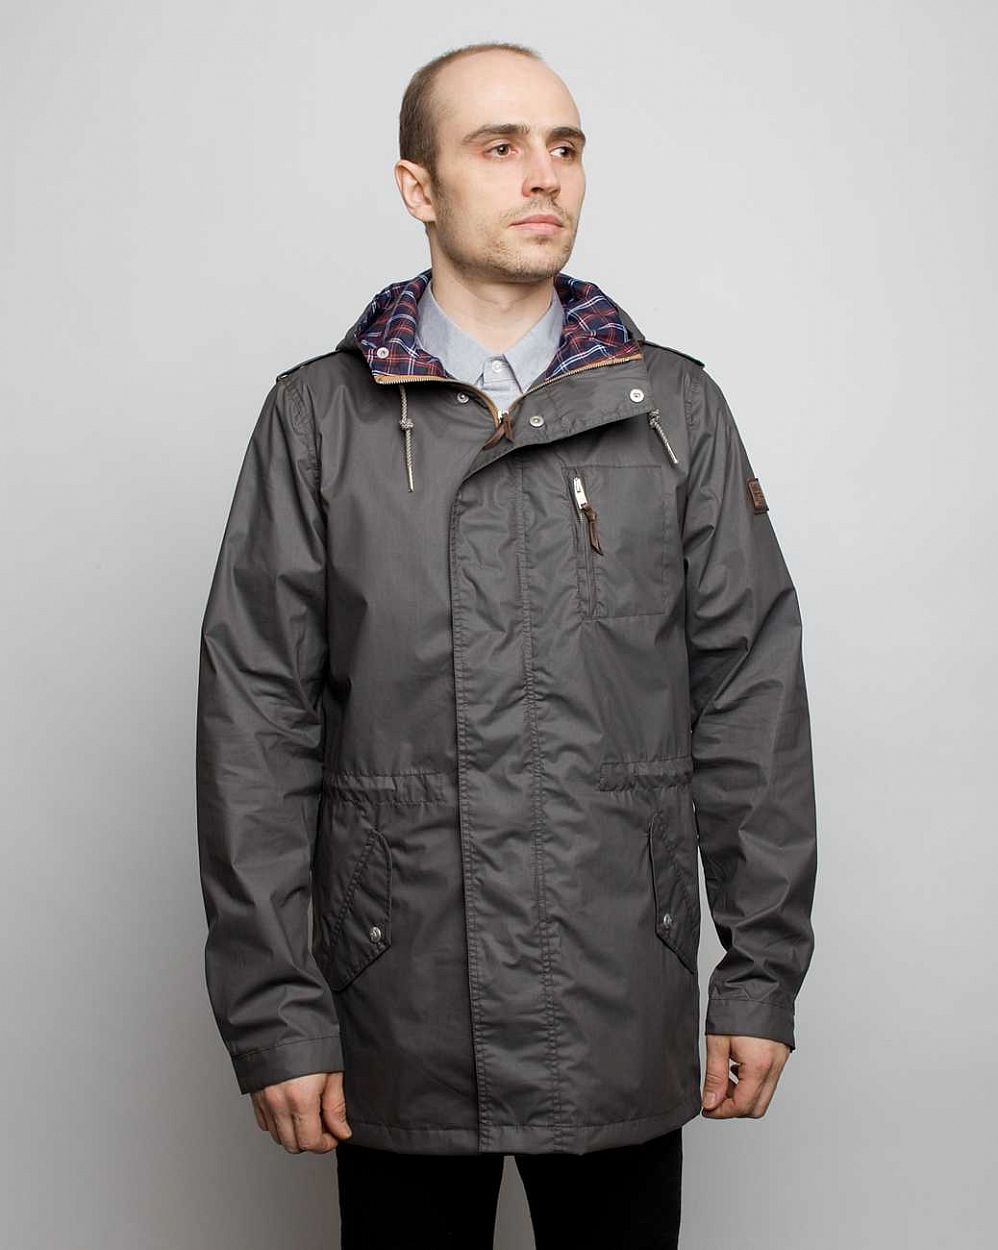 Куртка-Парка Loading Garments Supply Jacket Grey 1225 отзывы